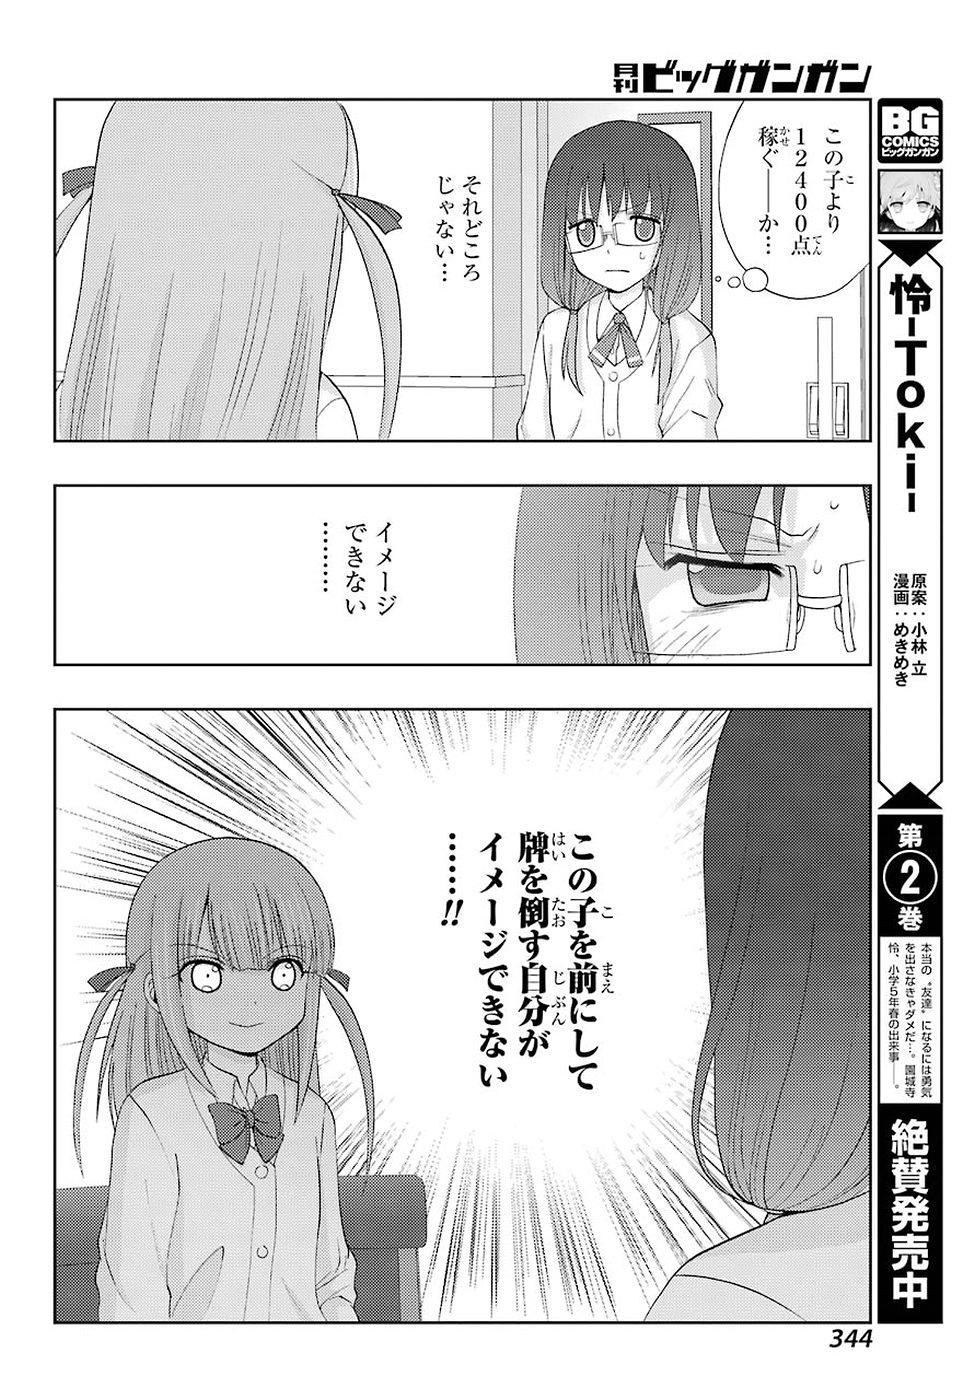 Shinohayu - The Dawn of Age Manga - Chapter 052 - Page 6